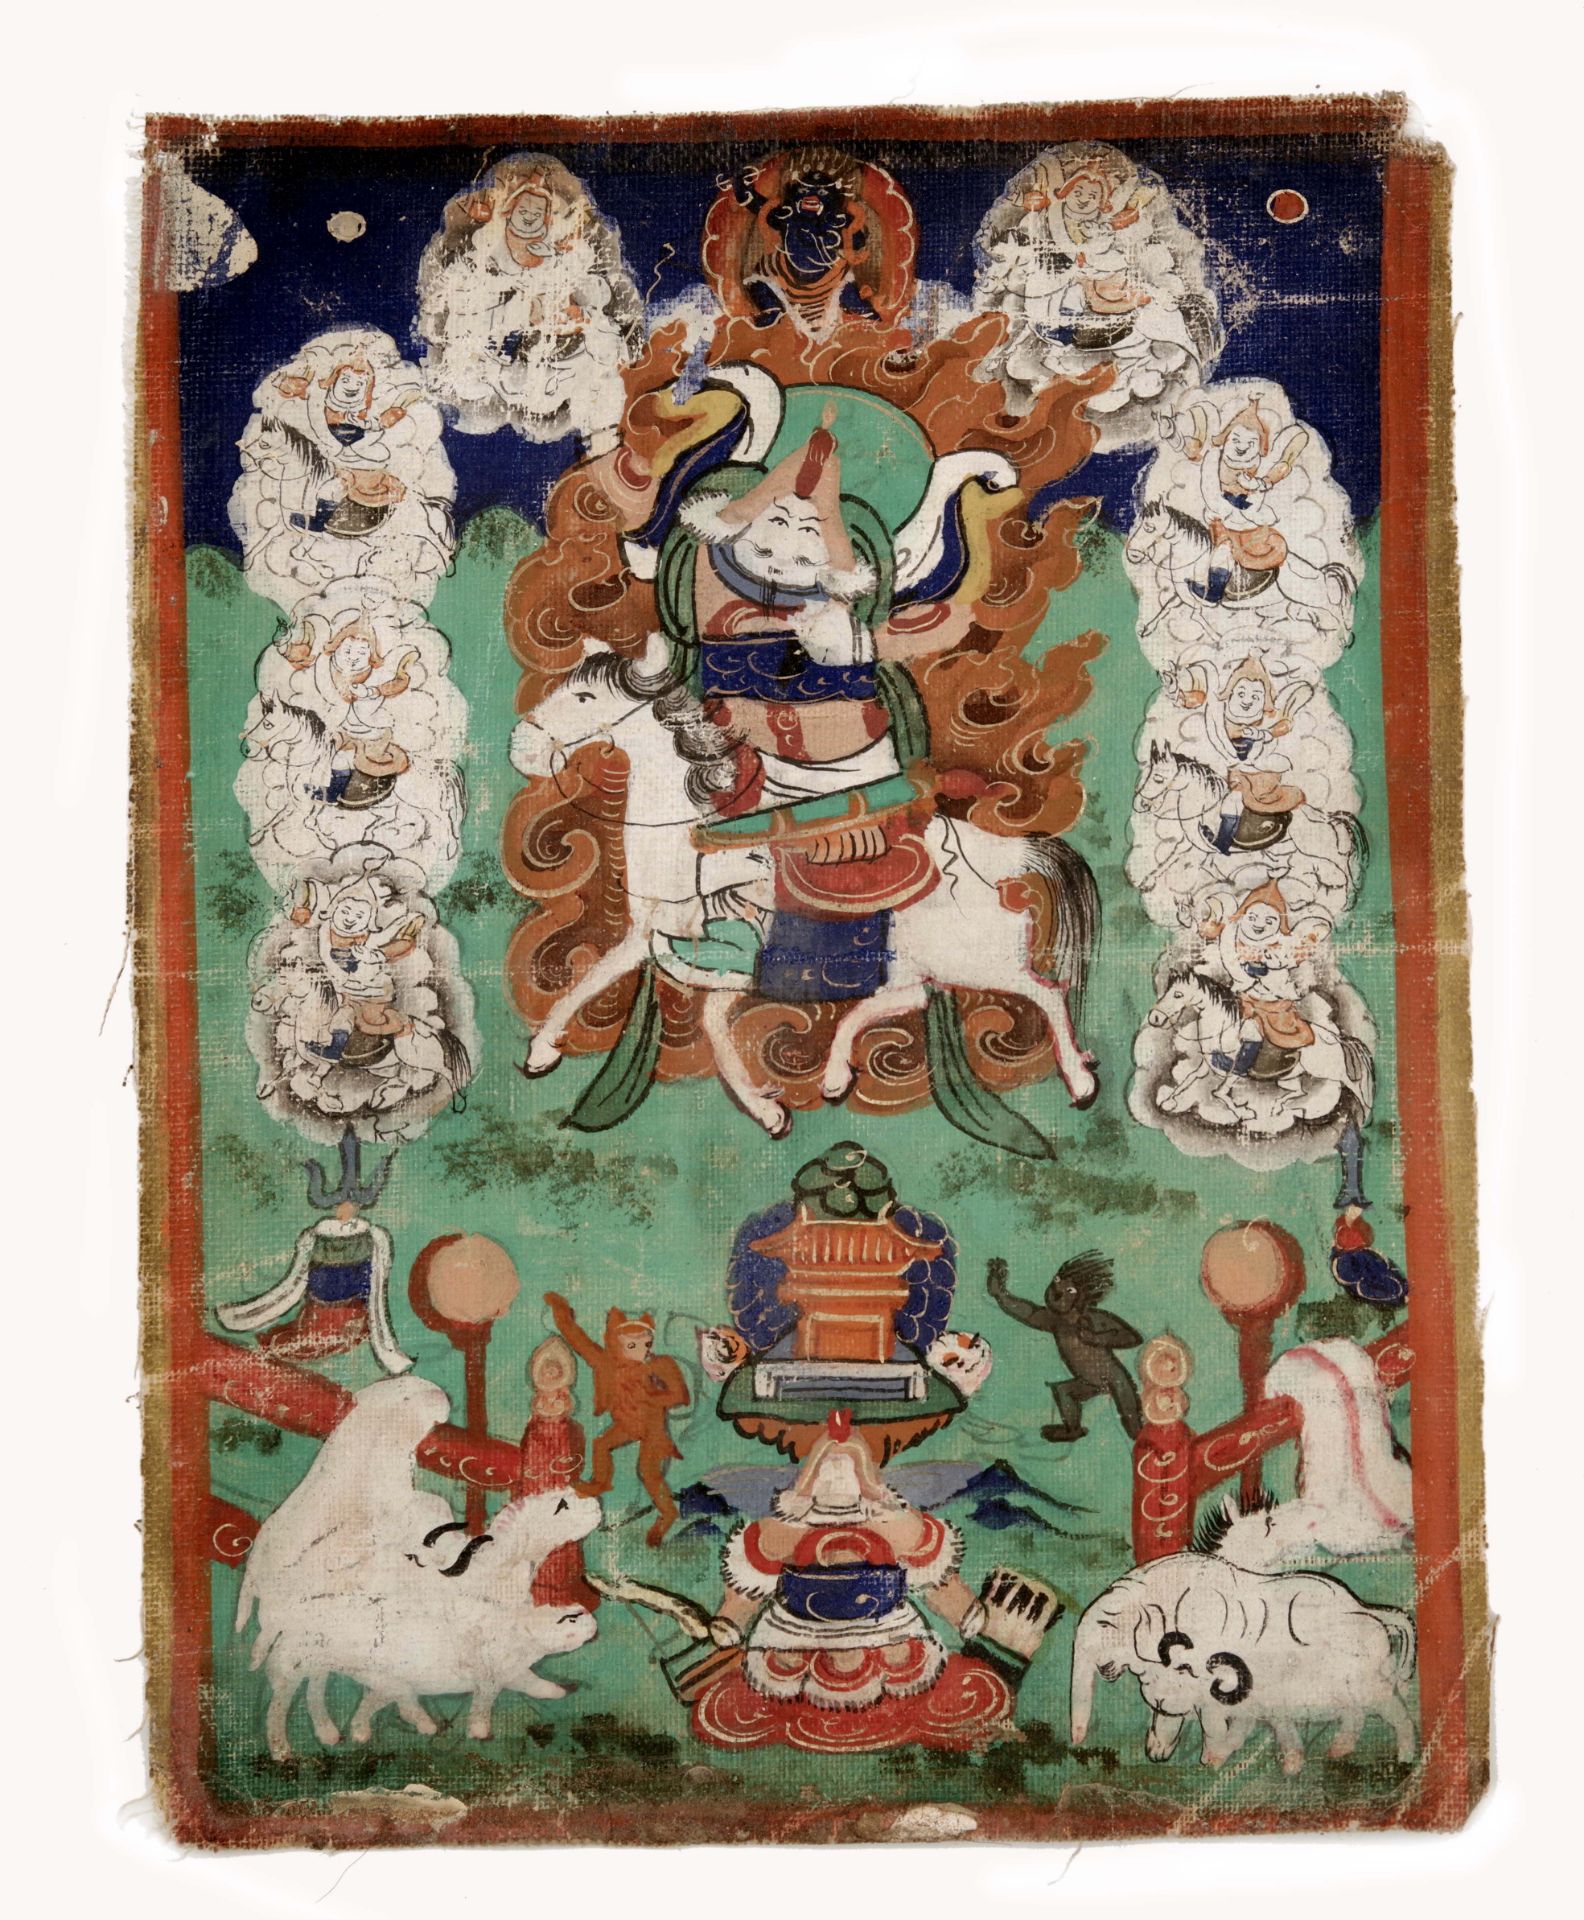 Tsakli mit der Göttin Palden Lhamo